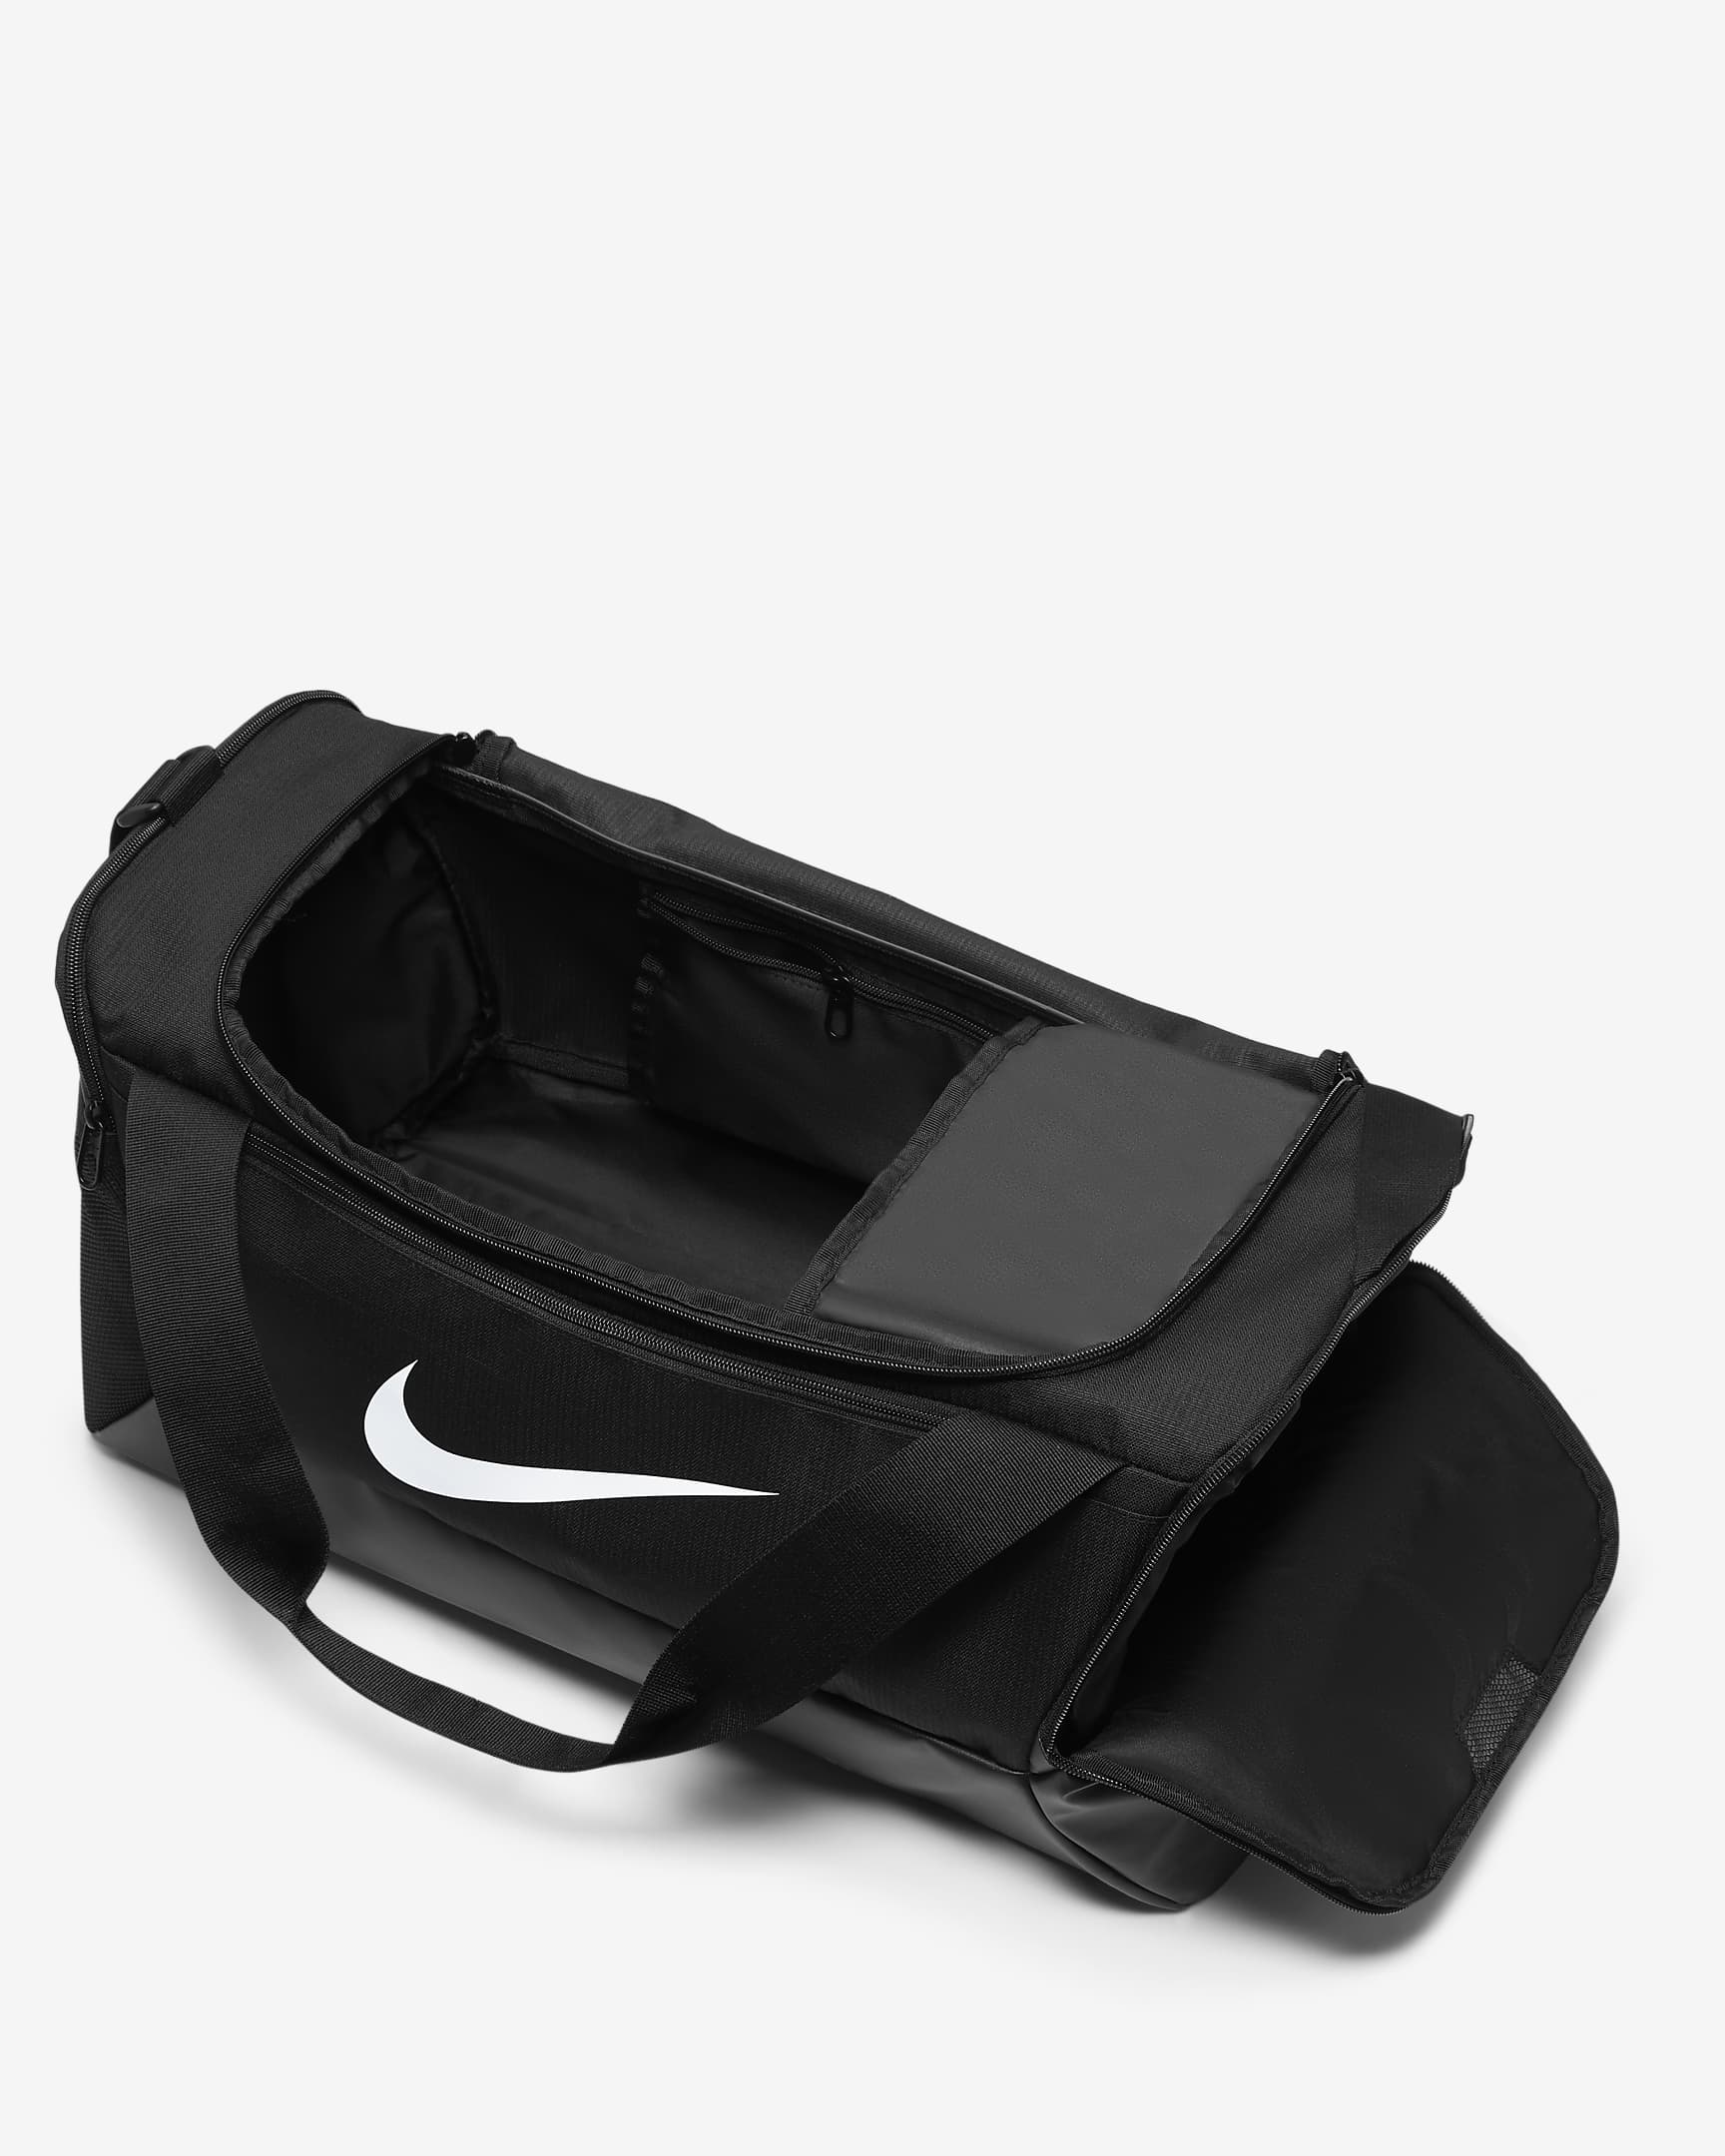 Nike brasilia 9.5 training duffel bag small 41l